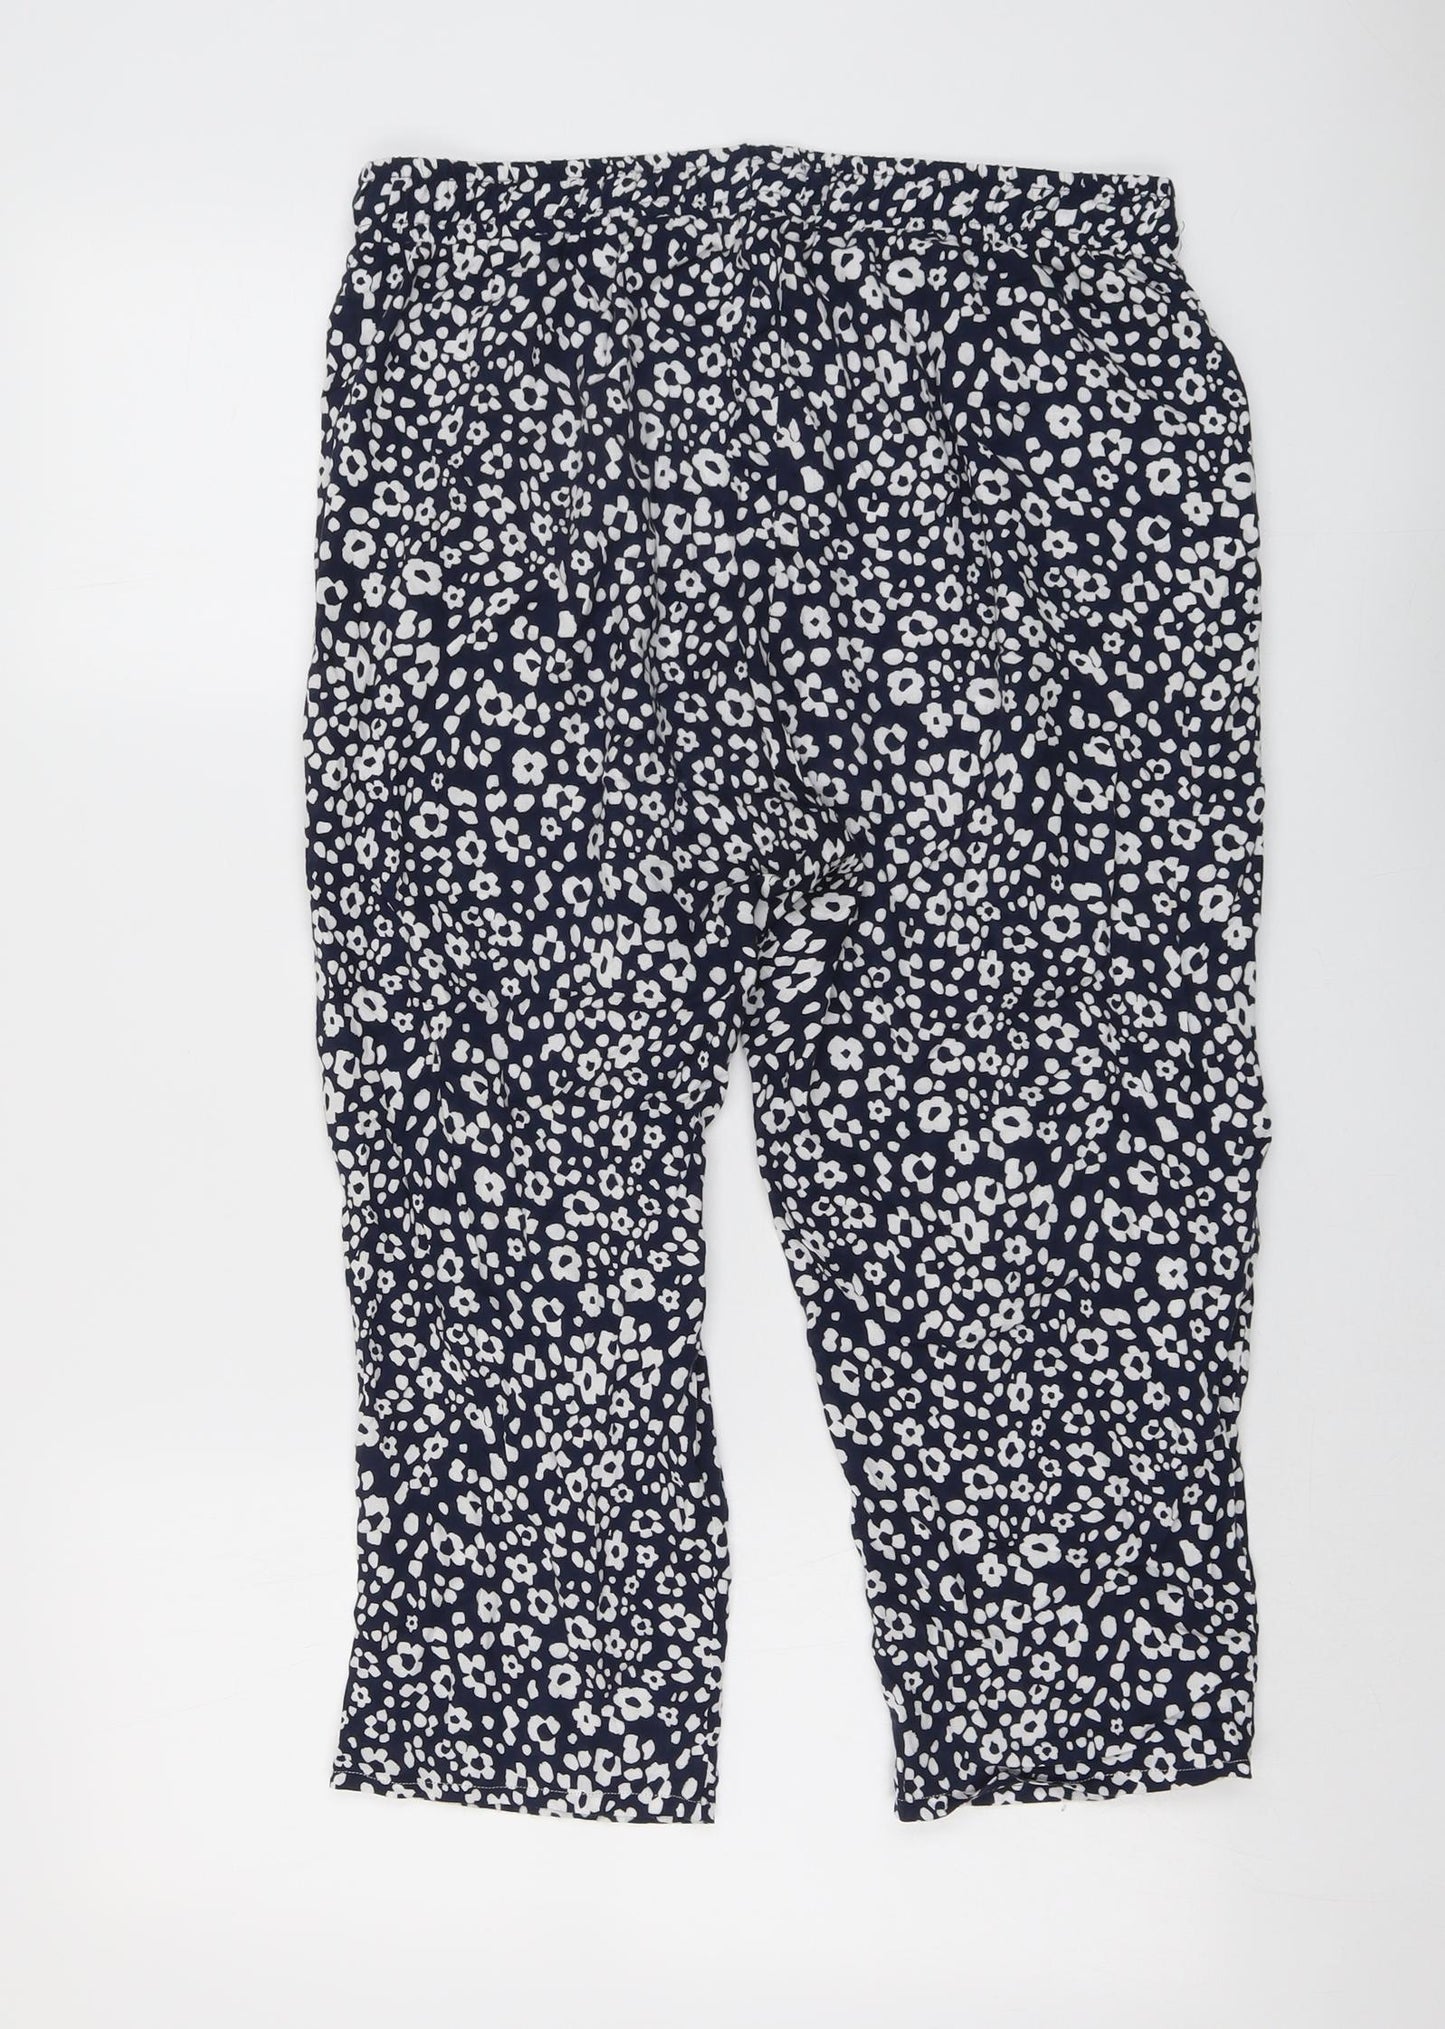 M&Co Womens Blue Animal Print Viscose Trousers Size 10 L21 in Regular - Leopard Print